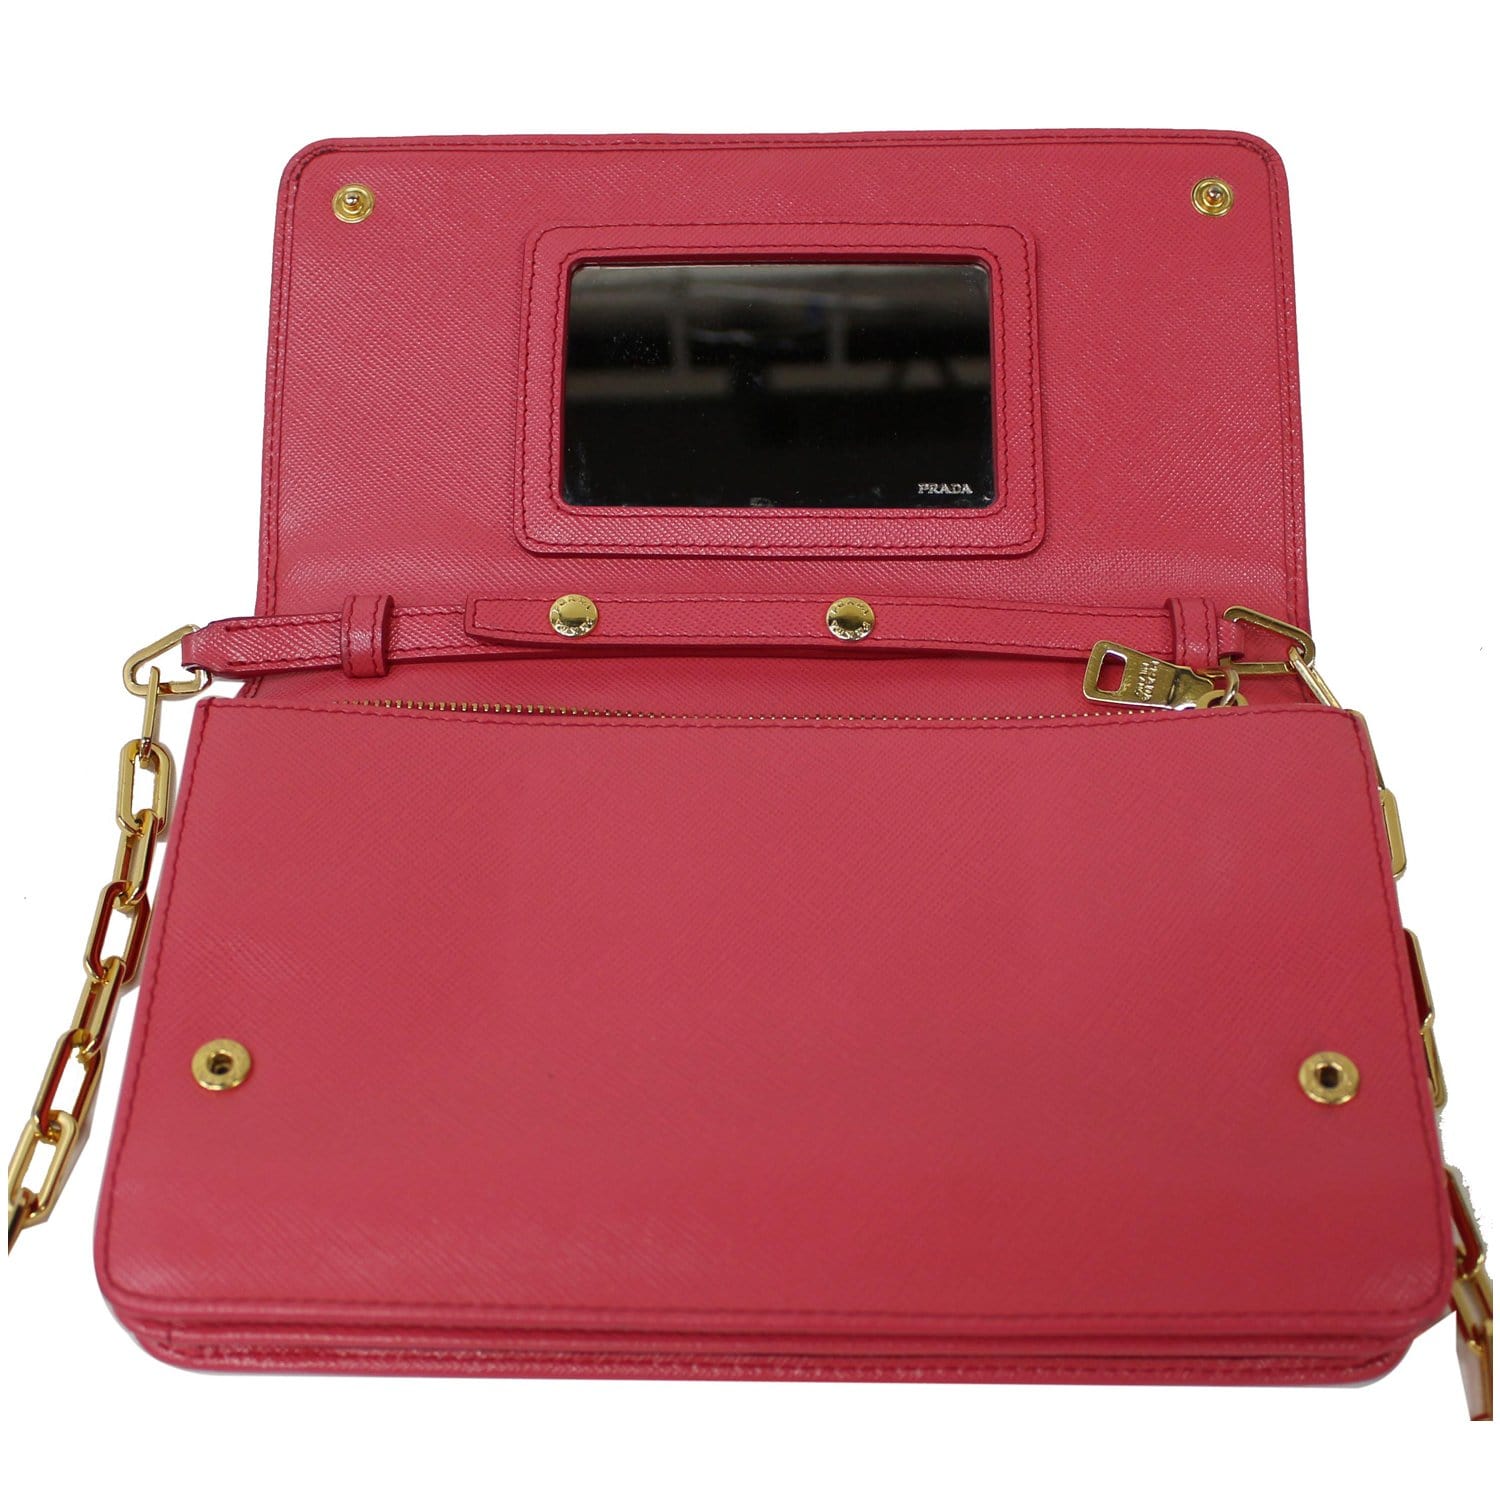 Prada Saffiano Lux Wallet On Chain - Pink Wallets, Accessories